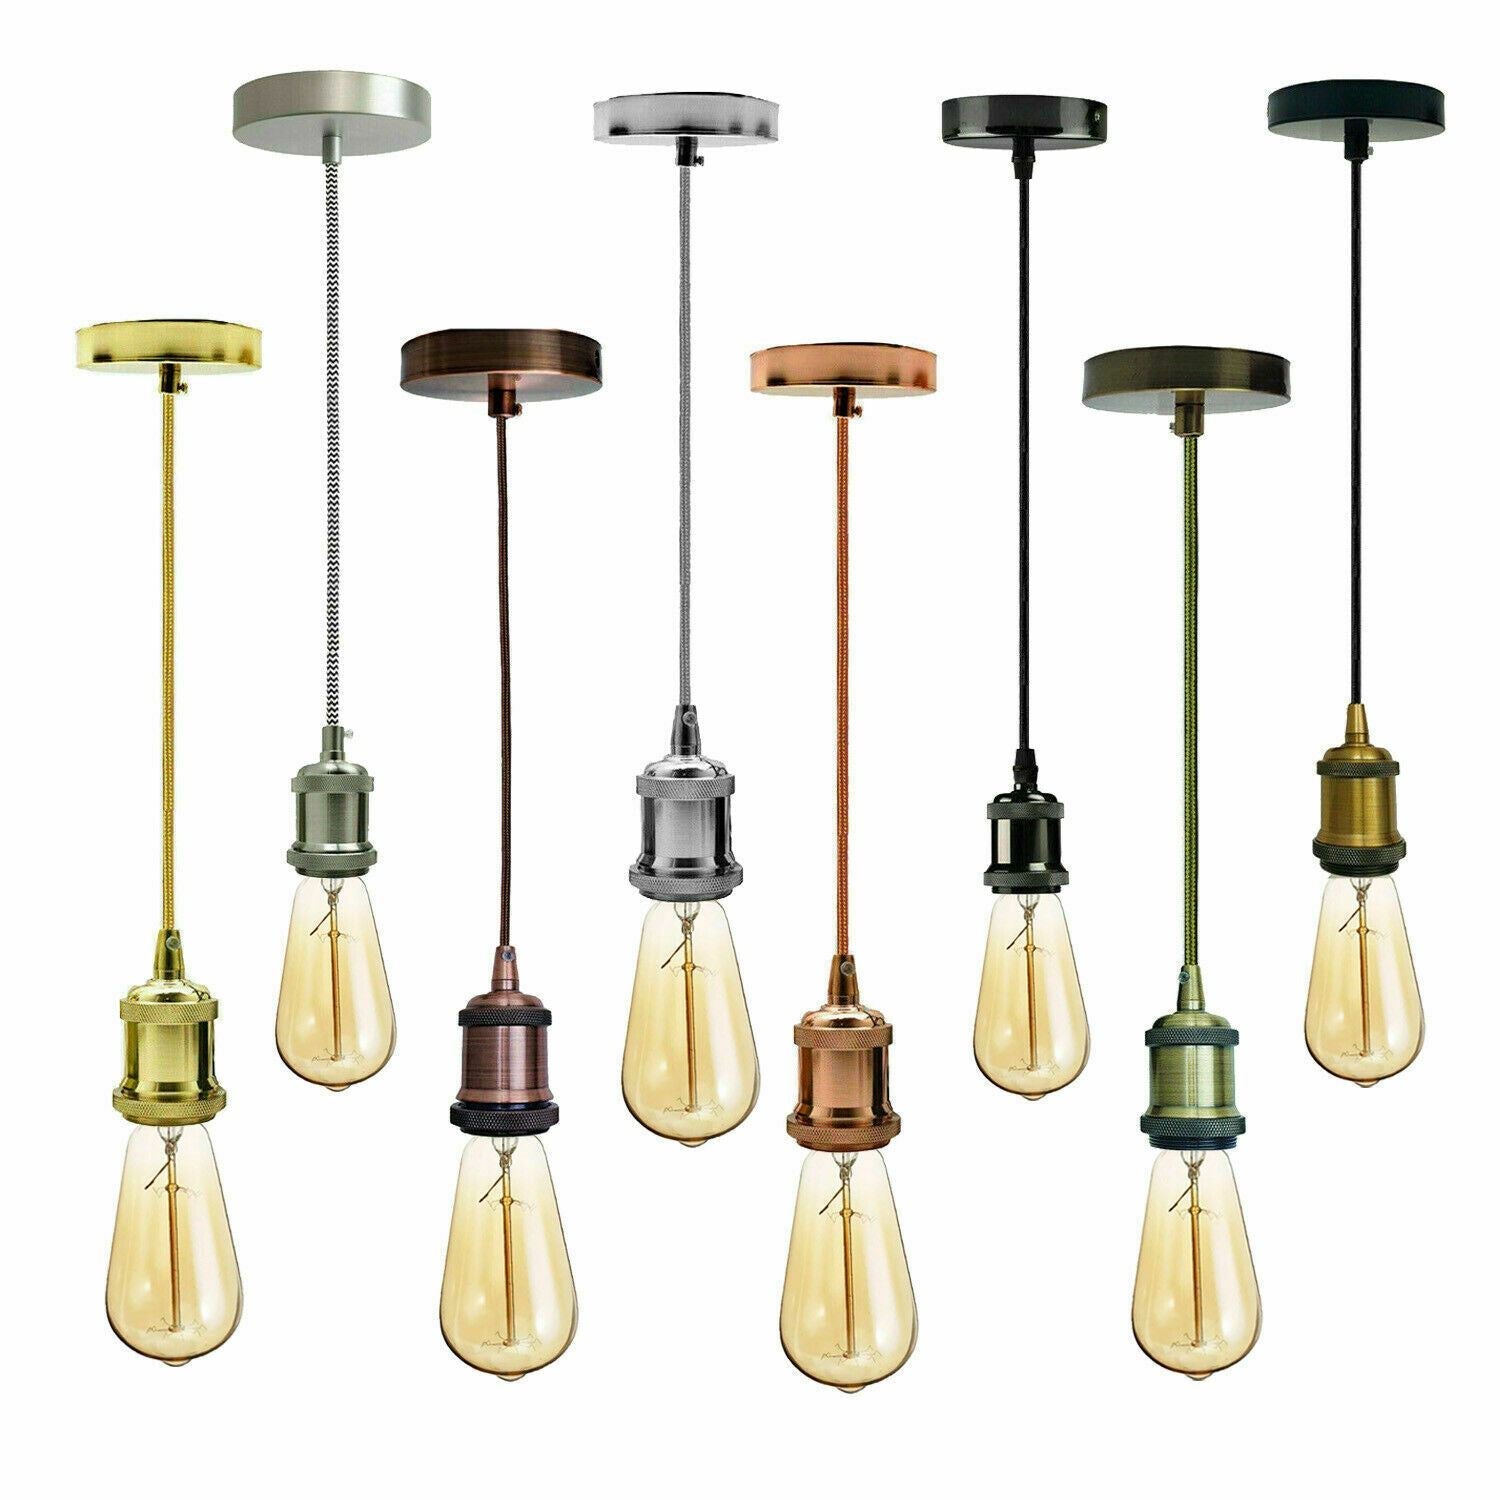 Retro Industrial Vintage Pendant Ceiling Rose Fitting E27 Lamp Bulb Holder For Bar, Bedroom, Conservatory, Dining Room~1282 - electricalsone UK Ltd